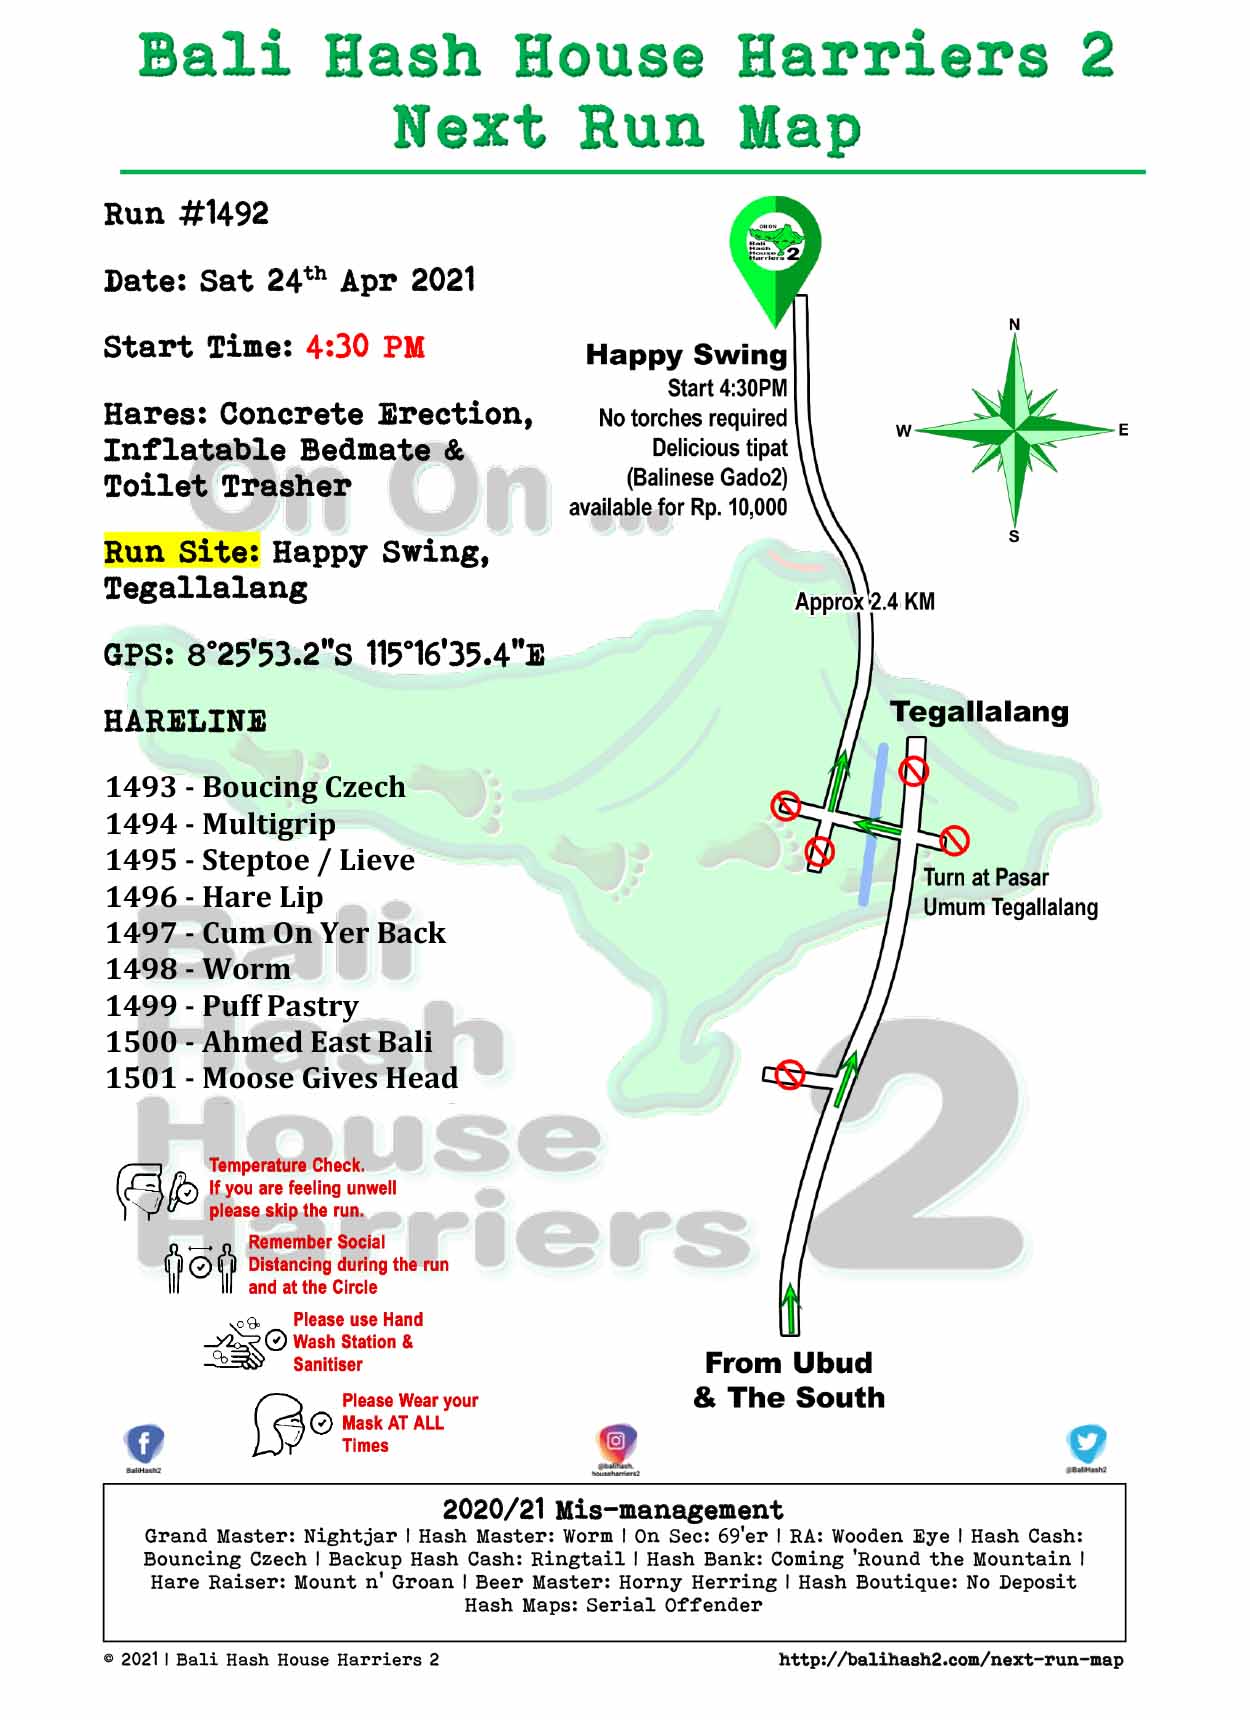 Bali Hash 2 Next Run Map #1492 Happy Swing Tegallalang 24-Apr-21